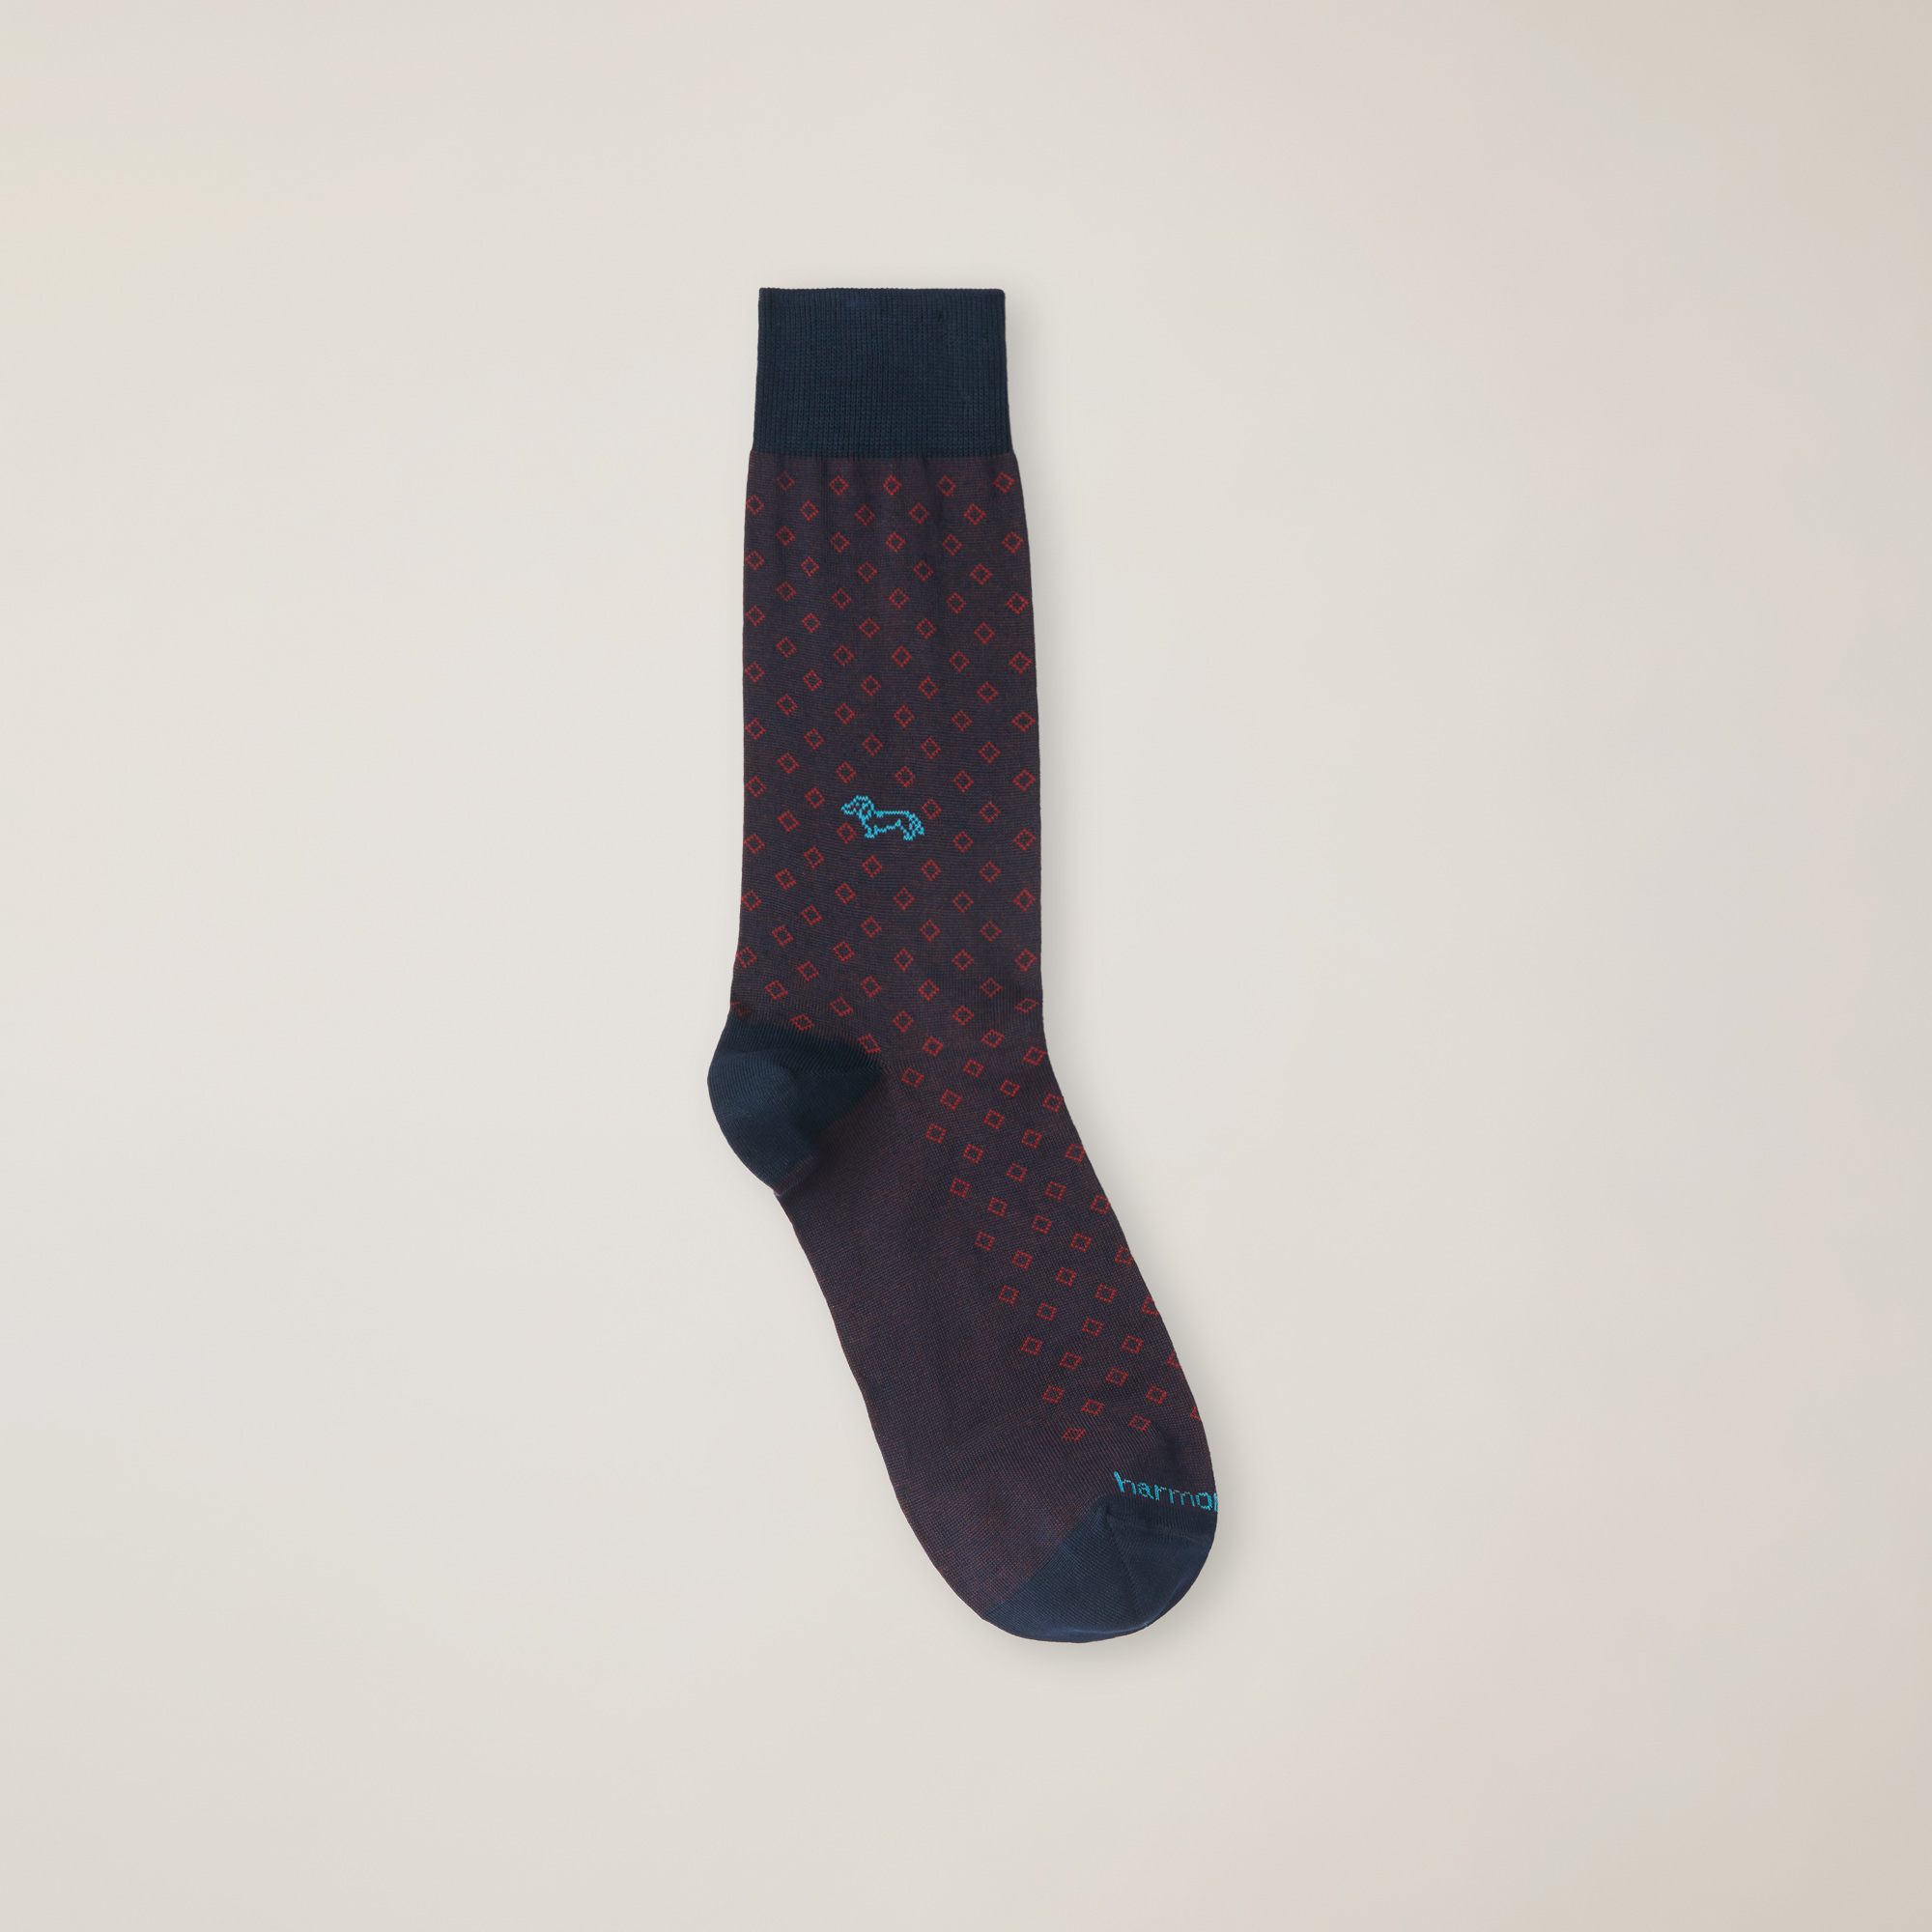 Kurze Socken Mit Mikromuster, Blau, large image number 0